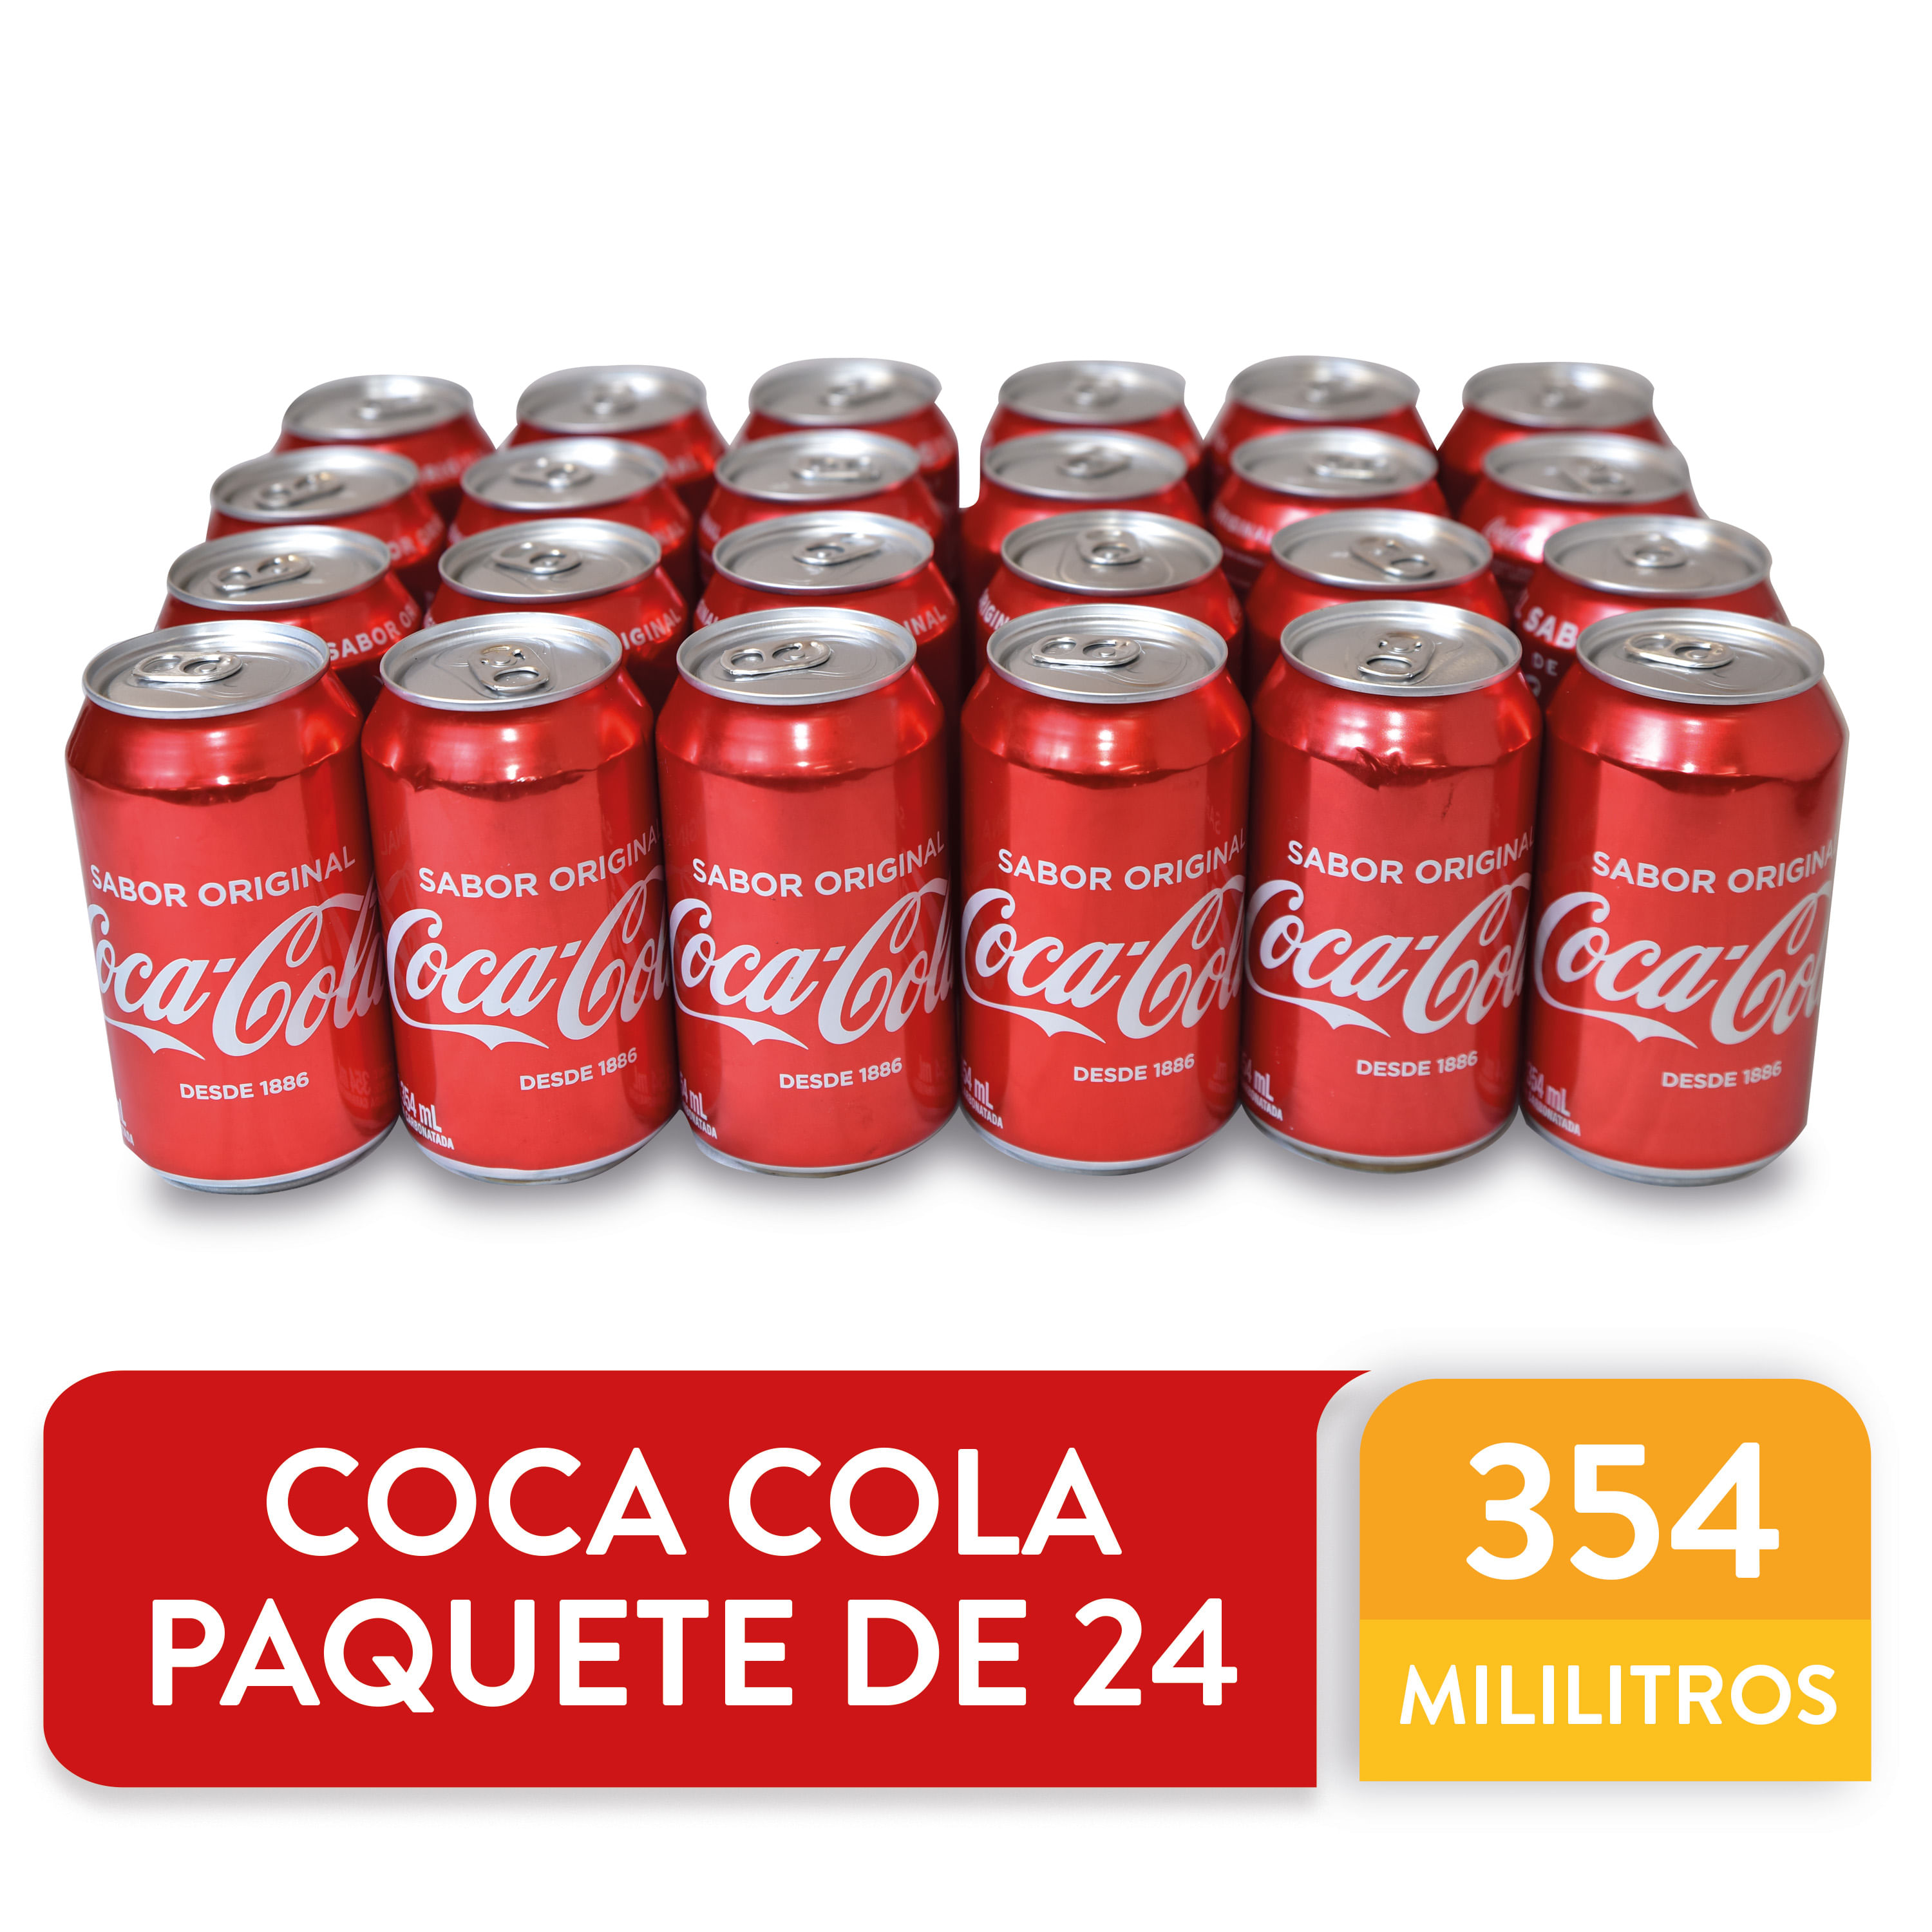 Gaseosa-Coca-Cola-regular-lata-24pack-8-52-L-1-5282